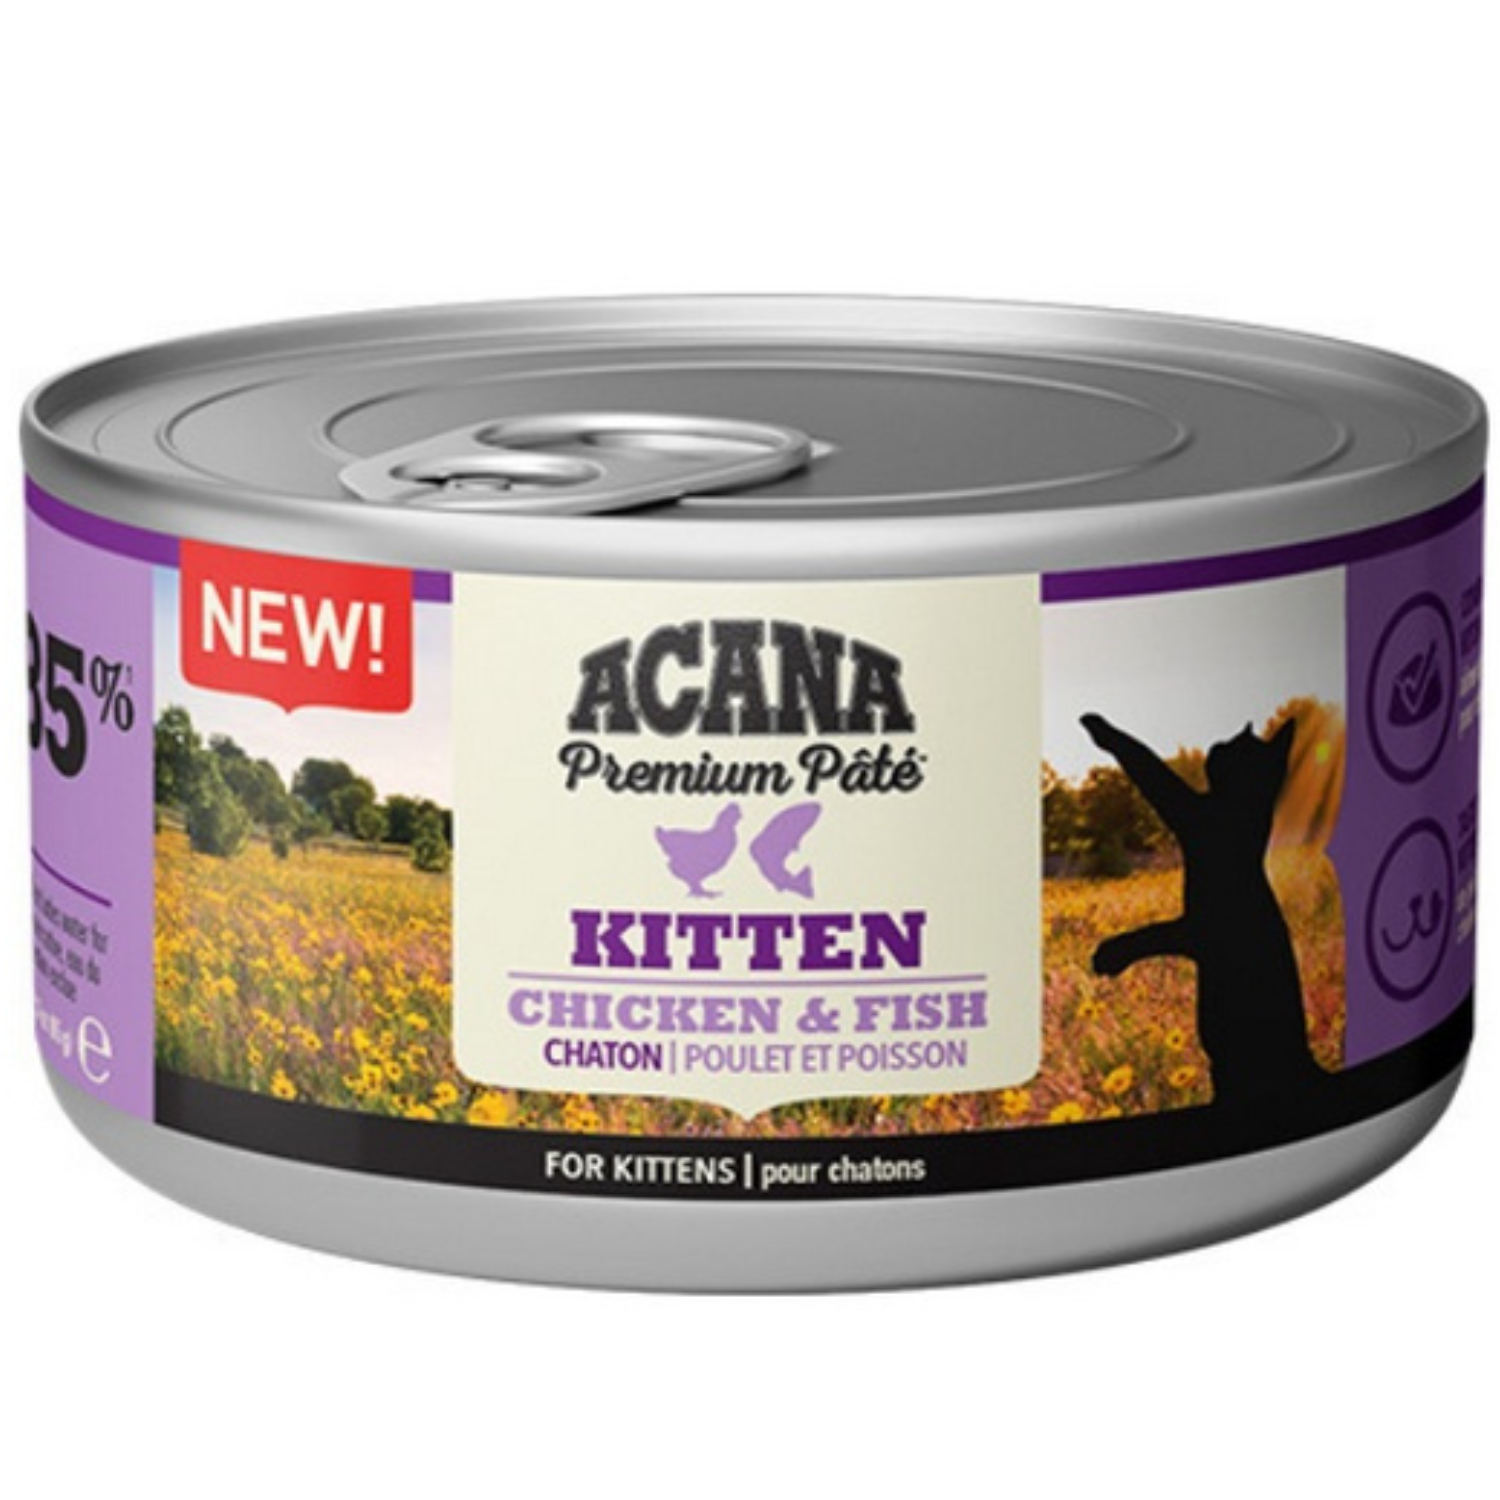 Acana Cat Premium Pate Kitten Chicken & Fish Puszka 85g - 0,085kg, 64992719791